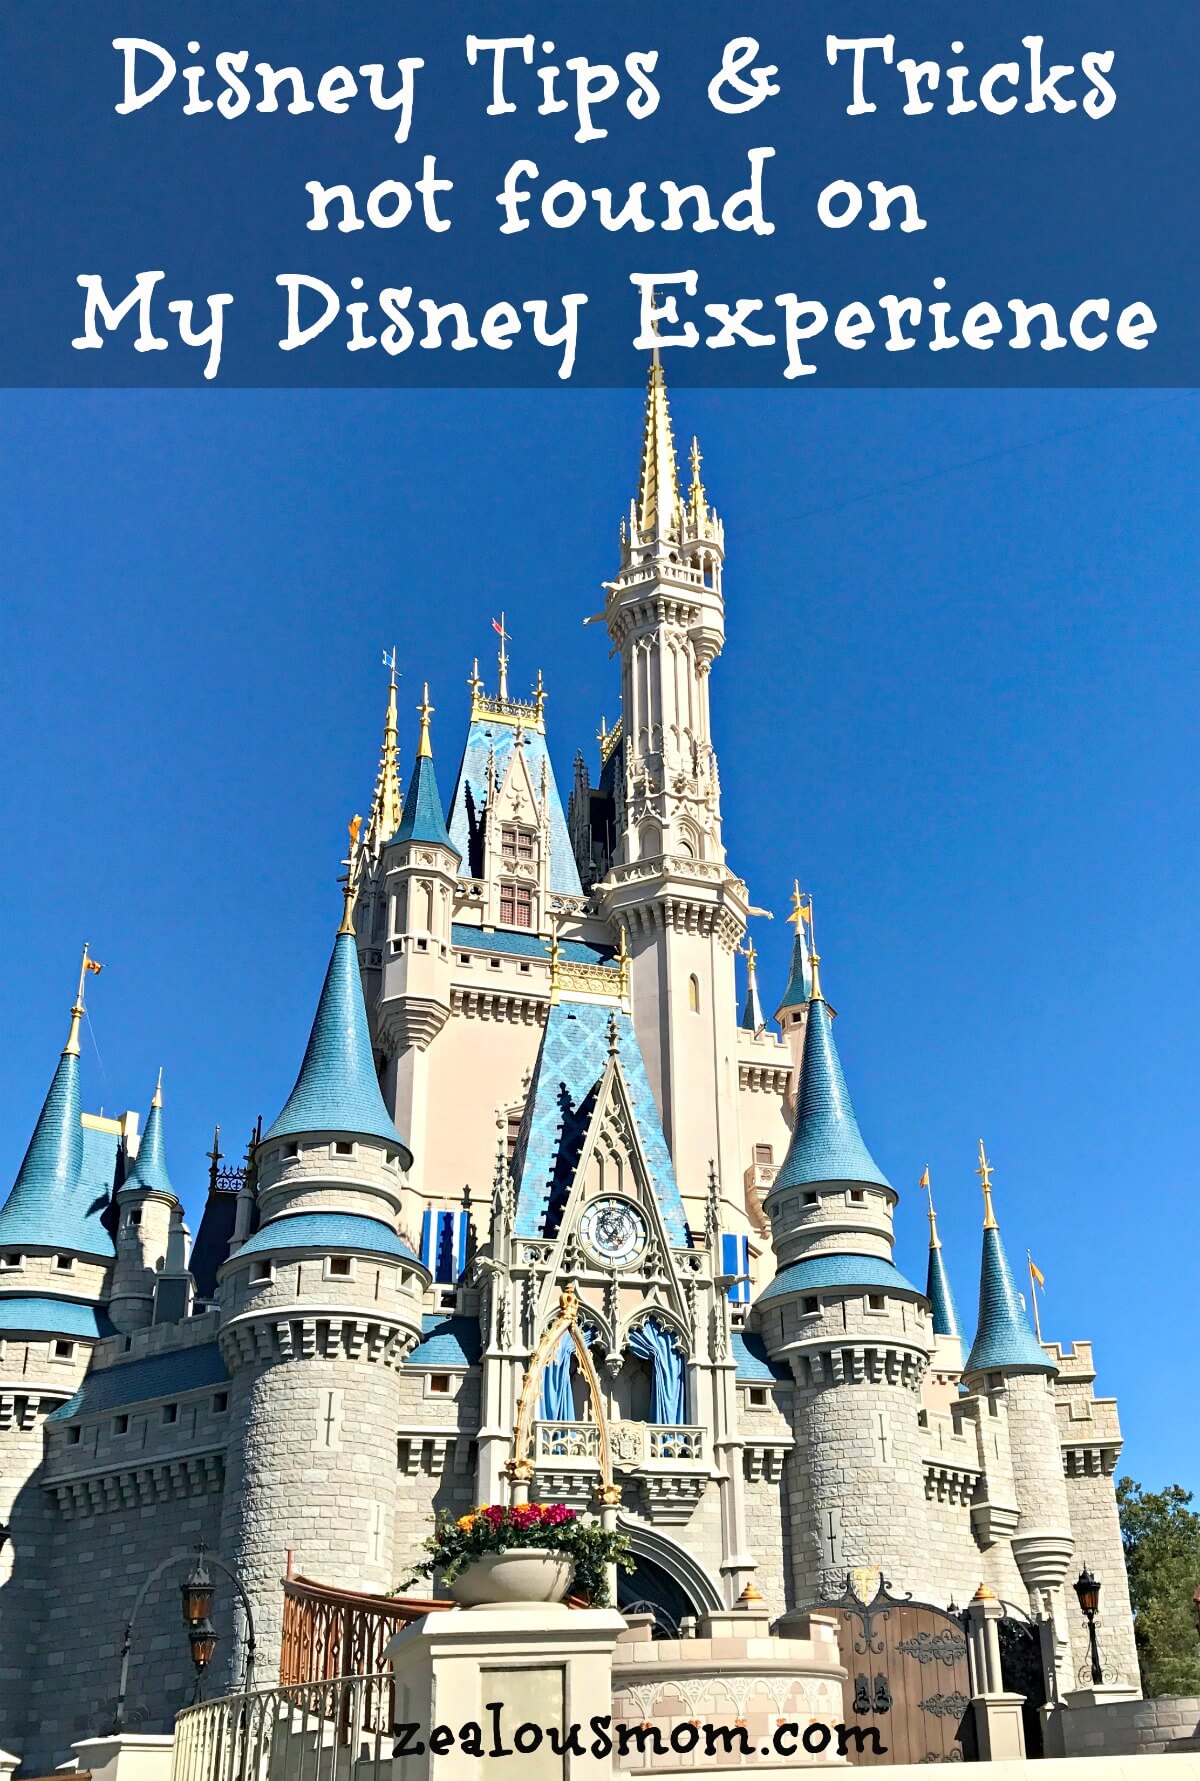 Disney Tips & Tricks Not Found on My Disney Experience